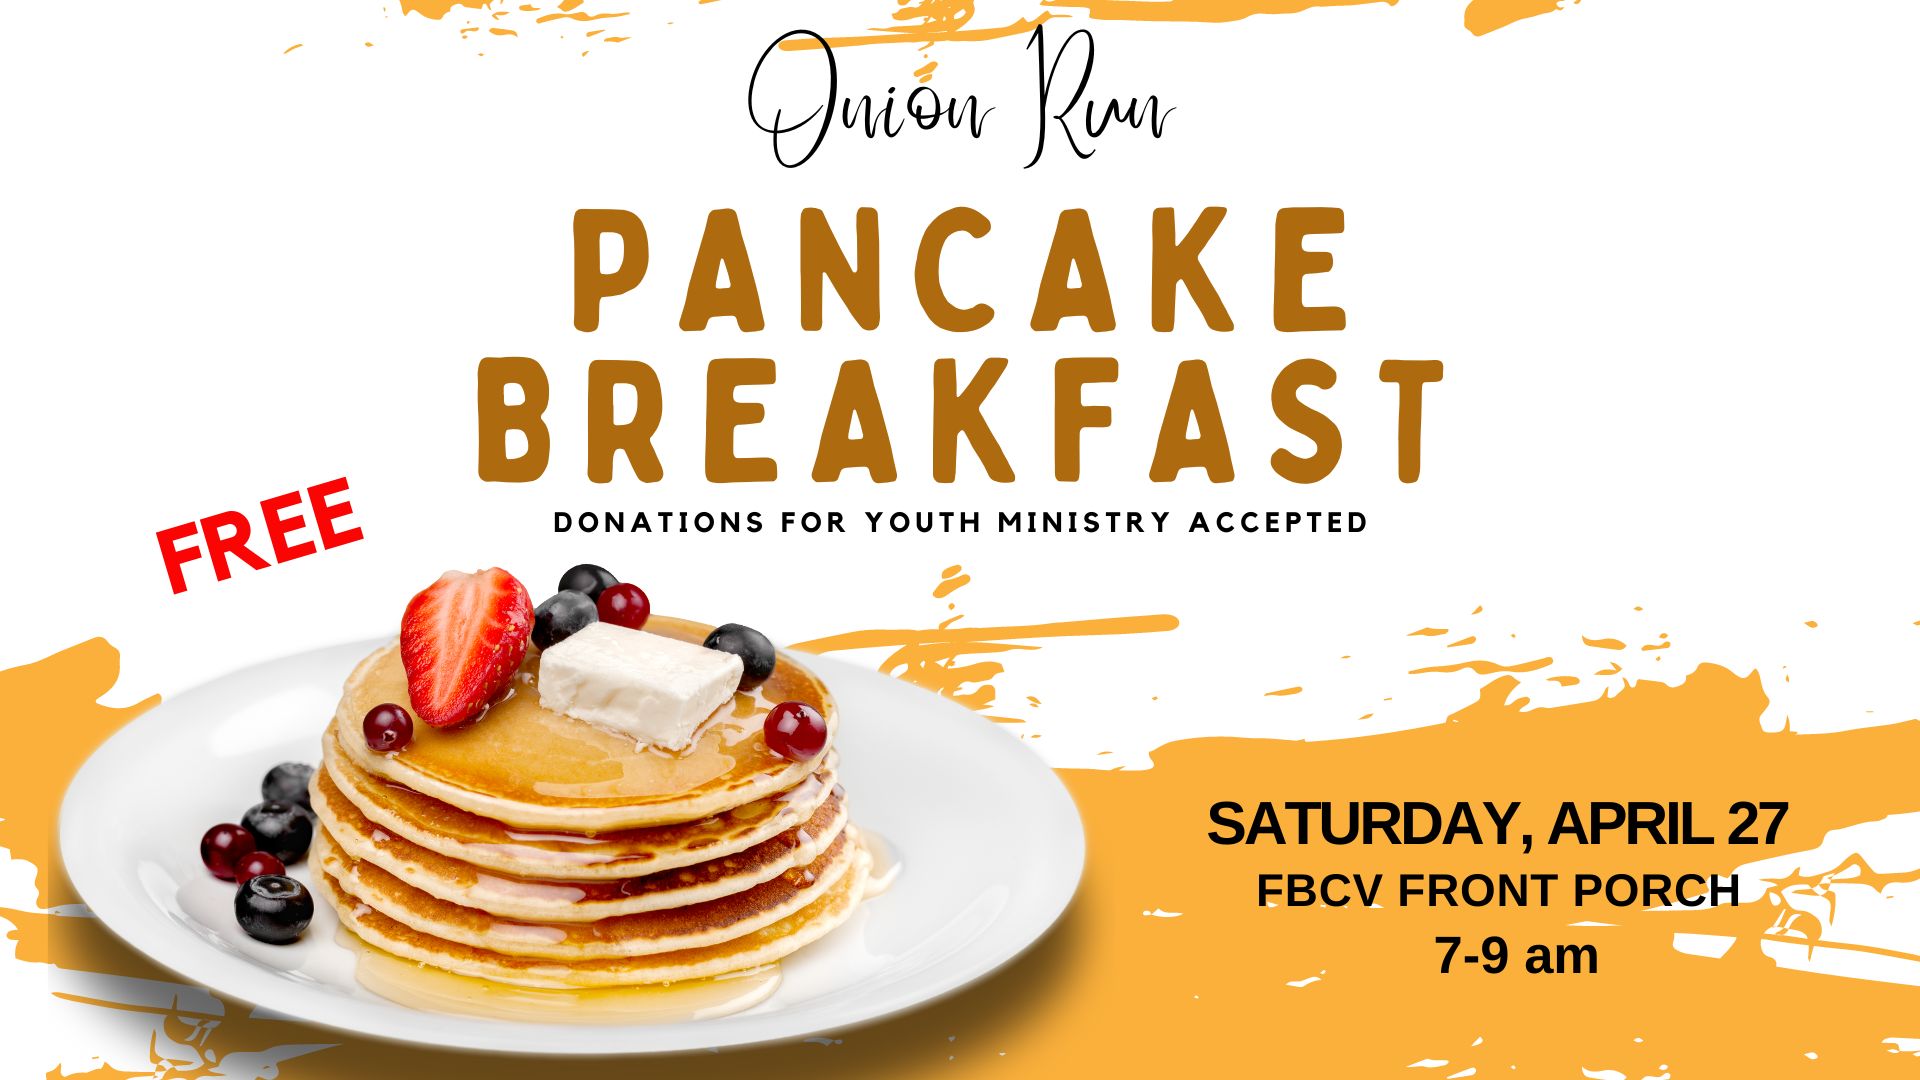 April 27--Pancake Breakfast for Youth Ministry during Vidalia Onion Run